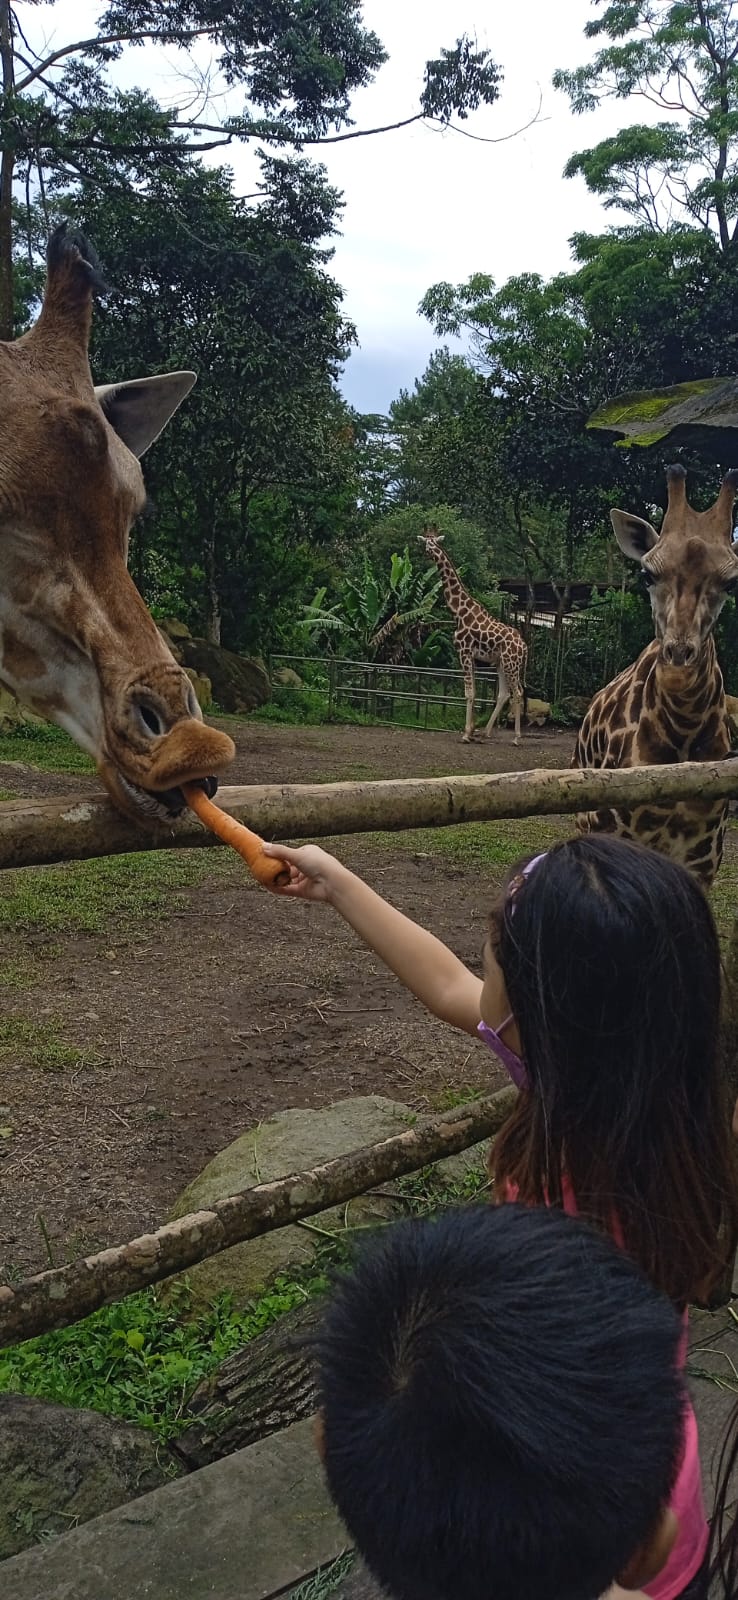 Taman Safari Indonesia berikan pengalaman edukatif bagi wisatawan Mancanegara maupun Domestik.